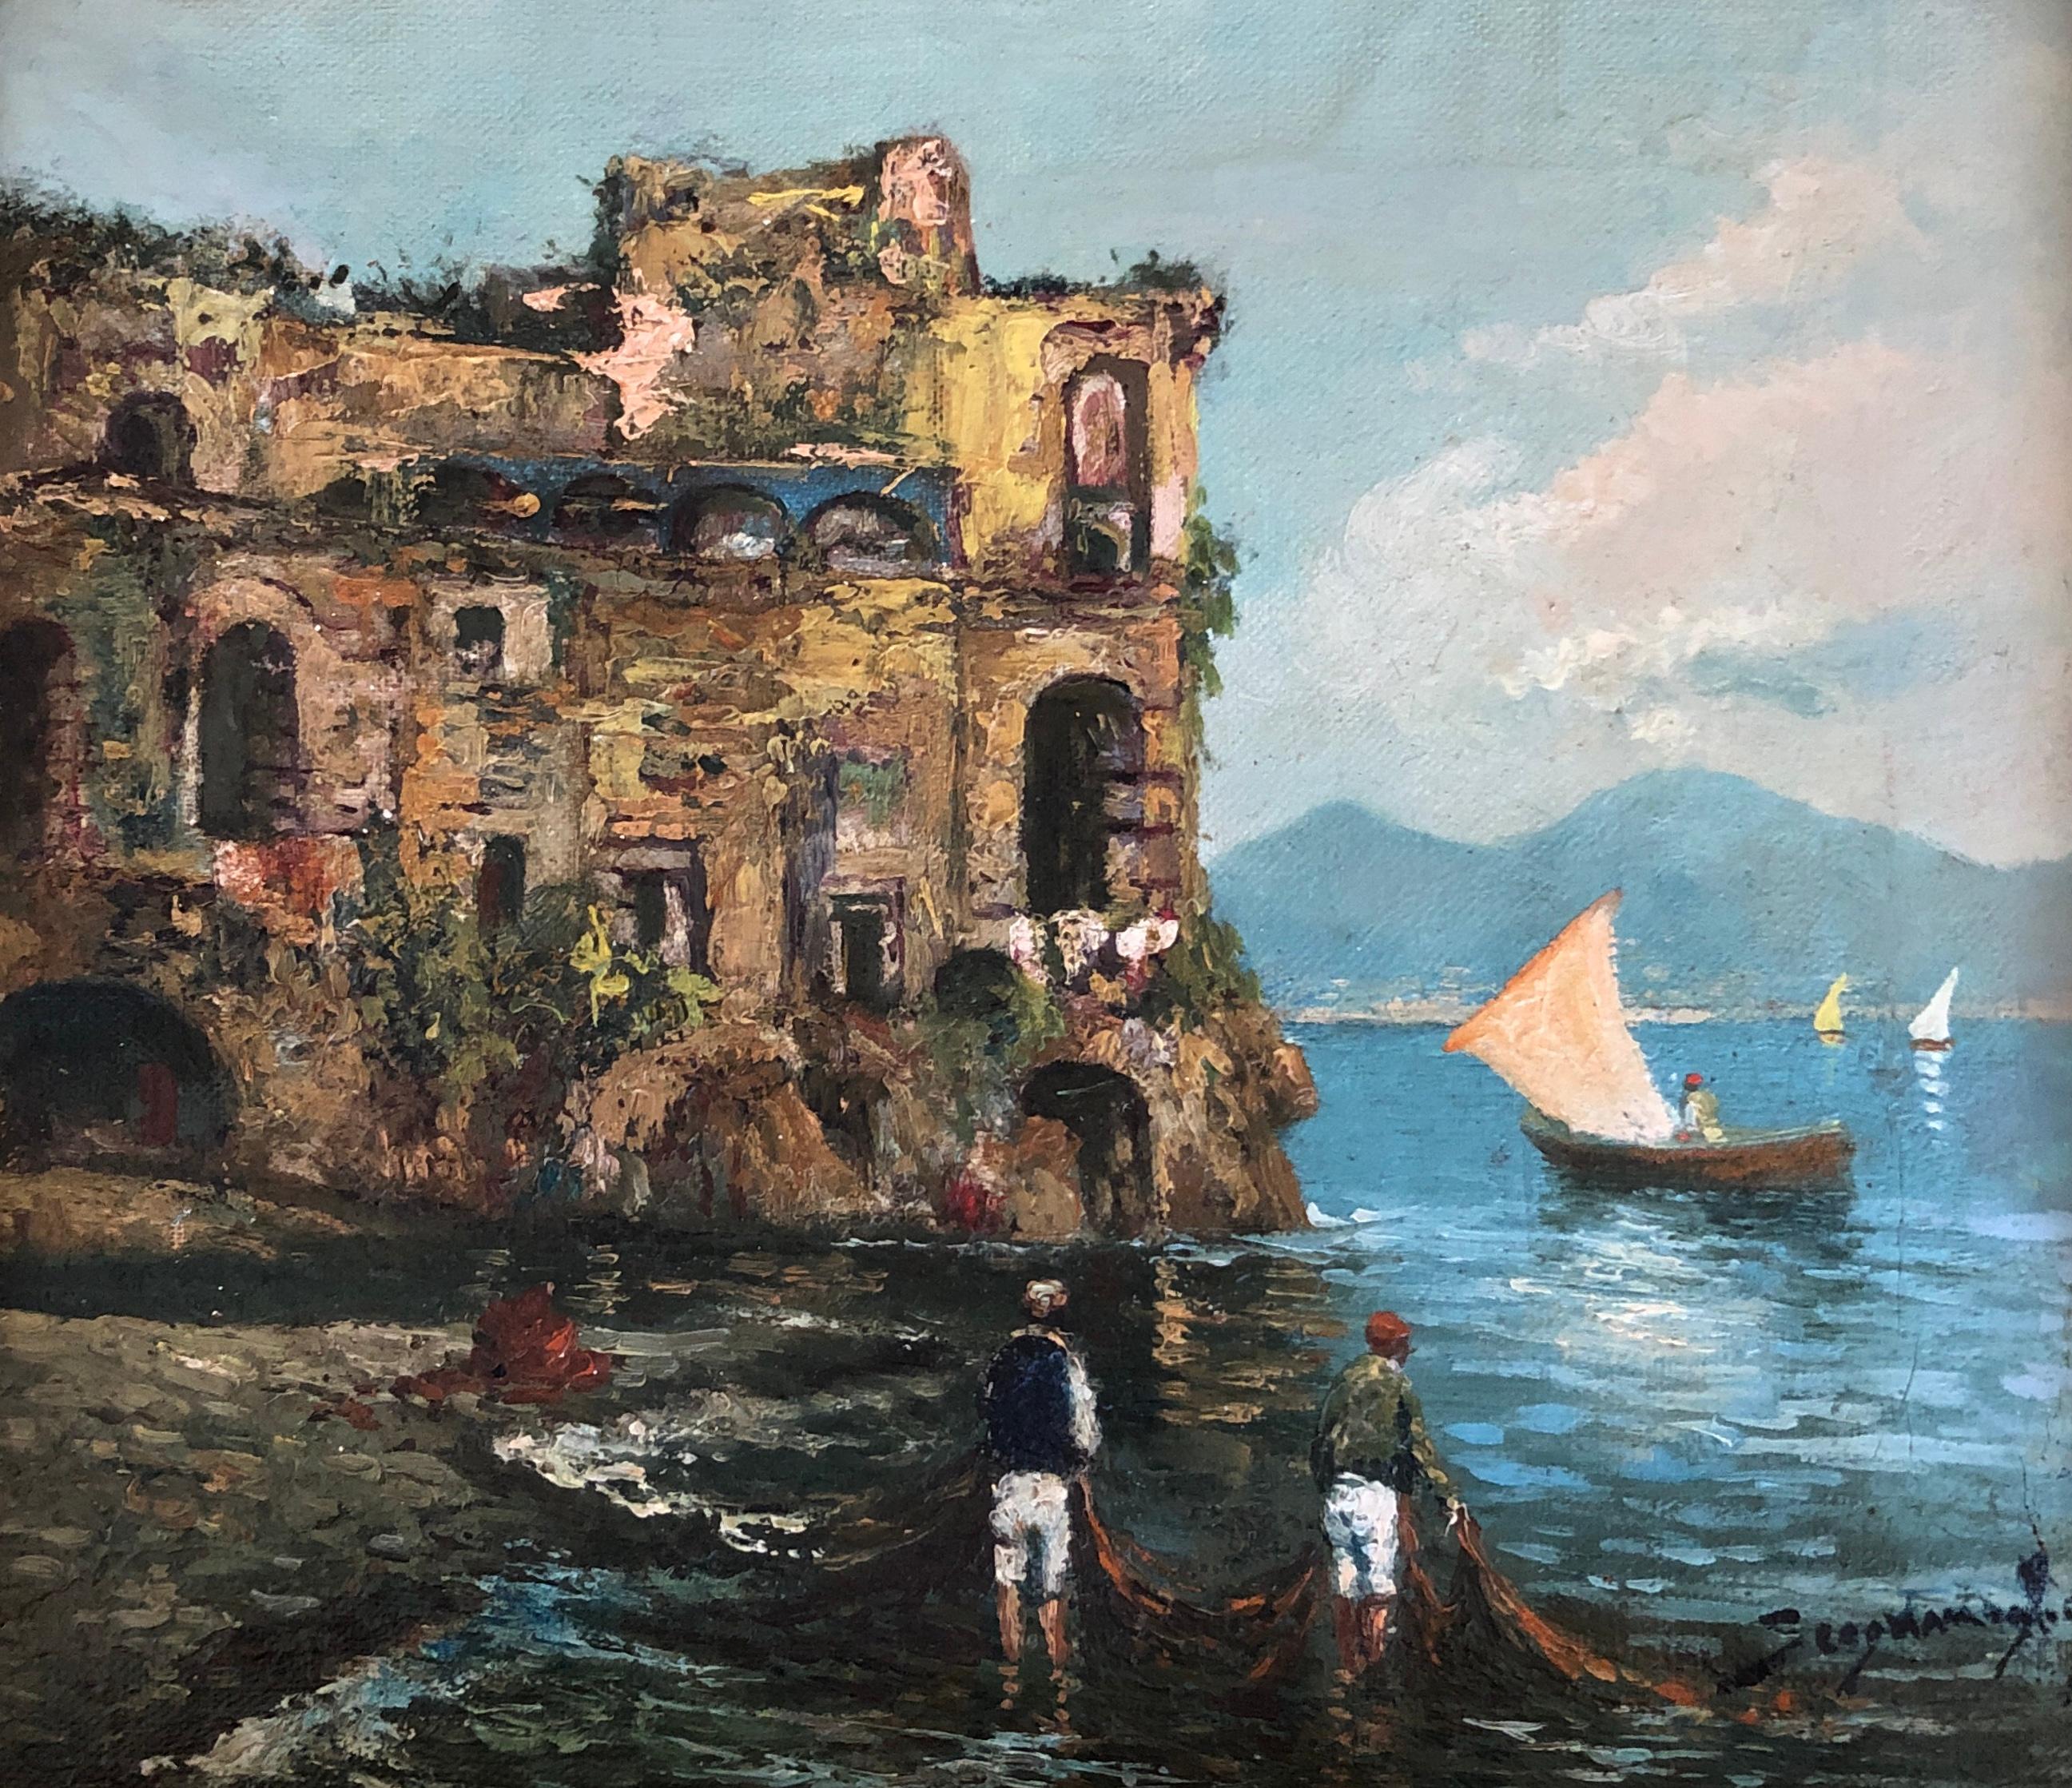 Roberto Scognamiglio Figurative Painting - Bay of Naples and fishermen